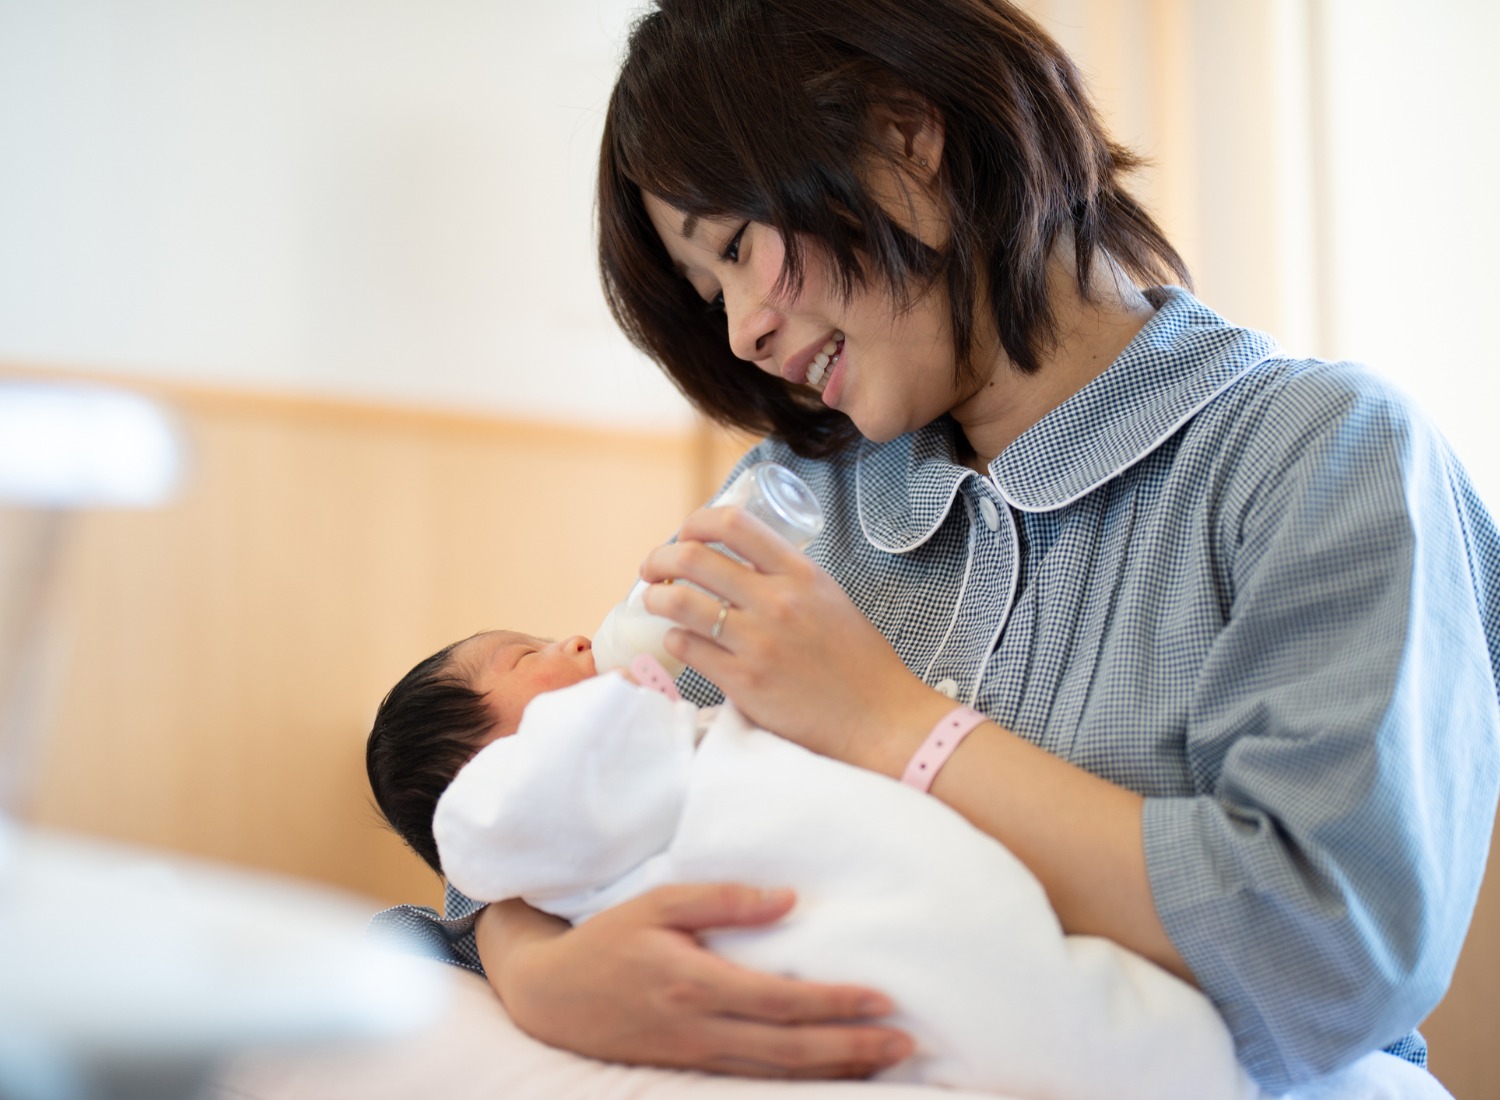 Woman bottle-feeding her newborn baby